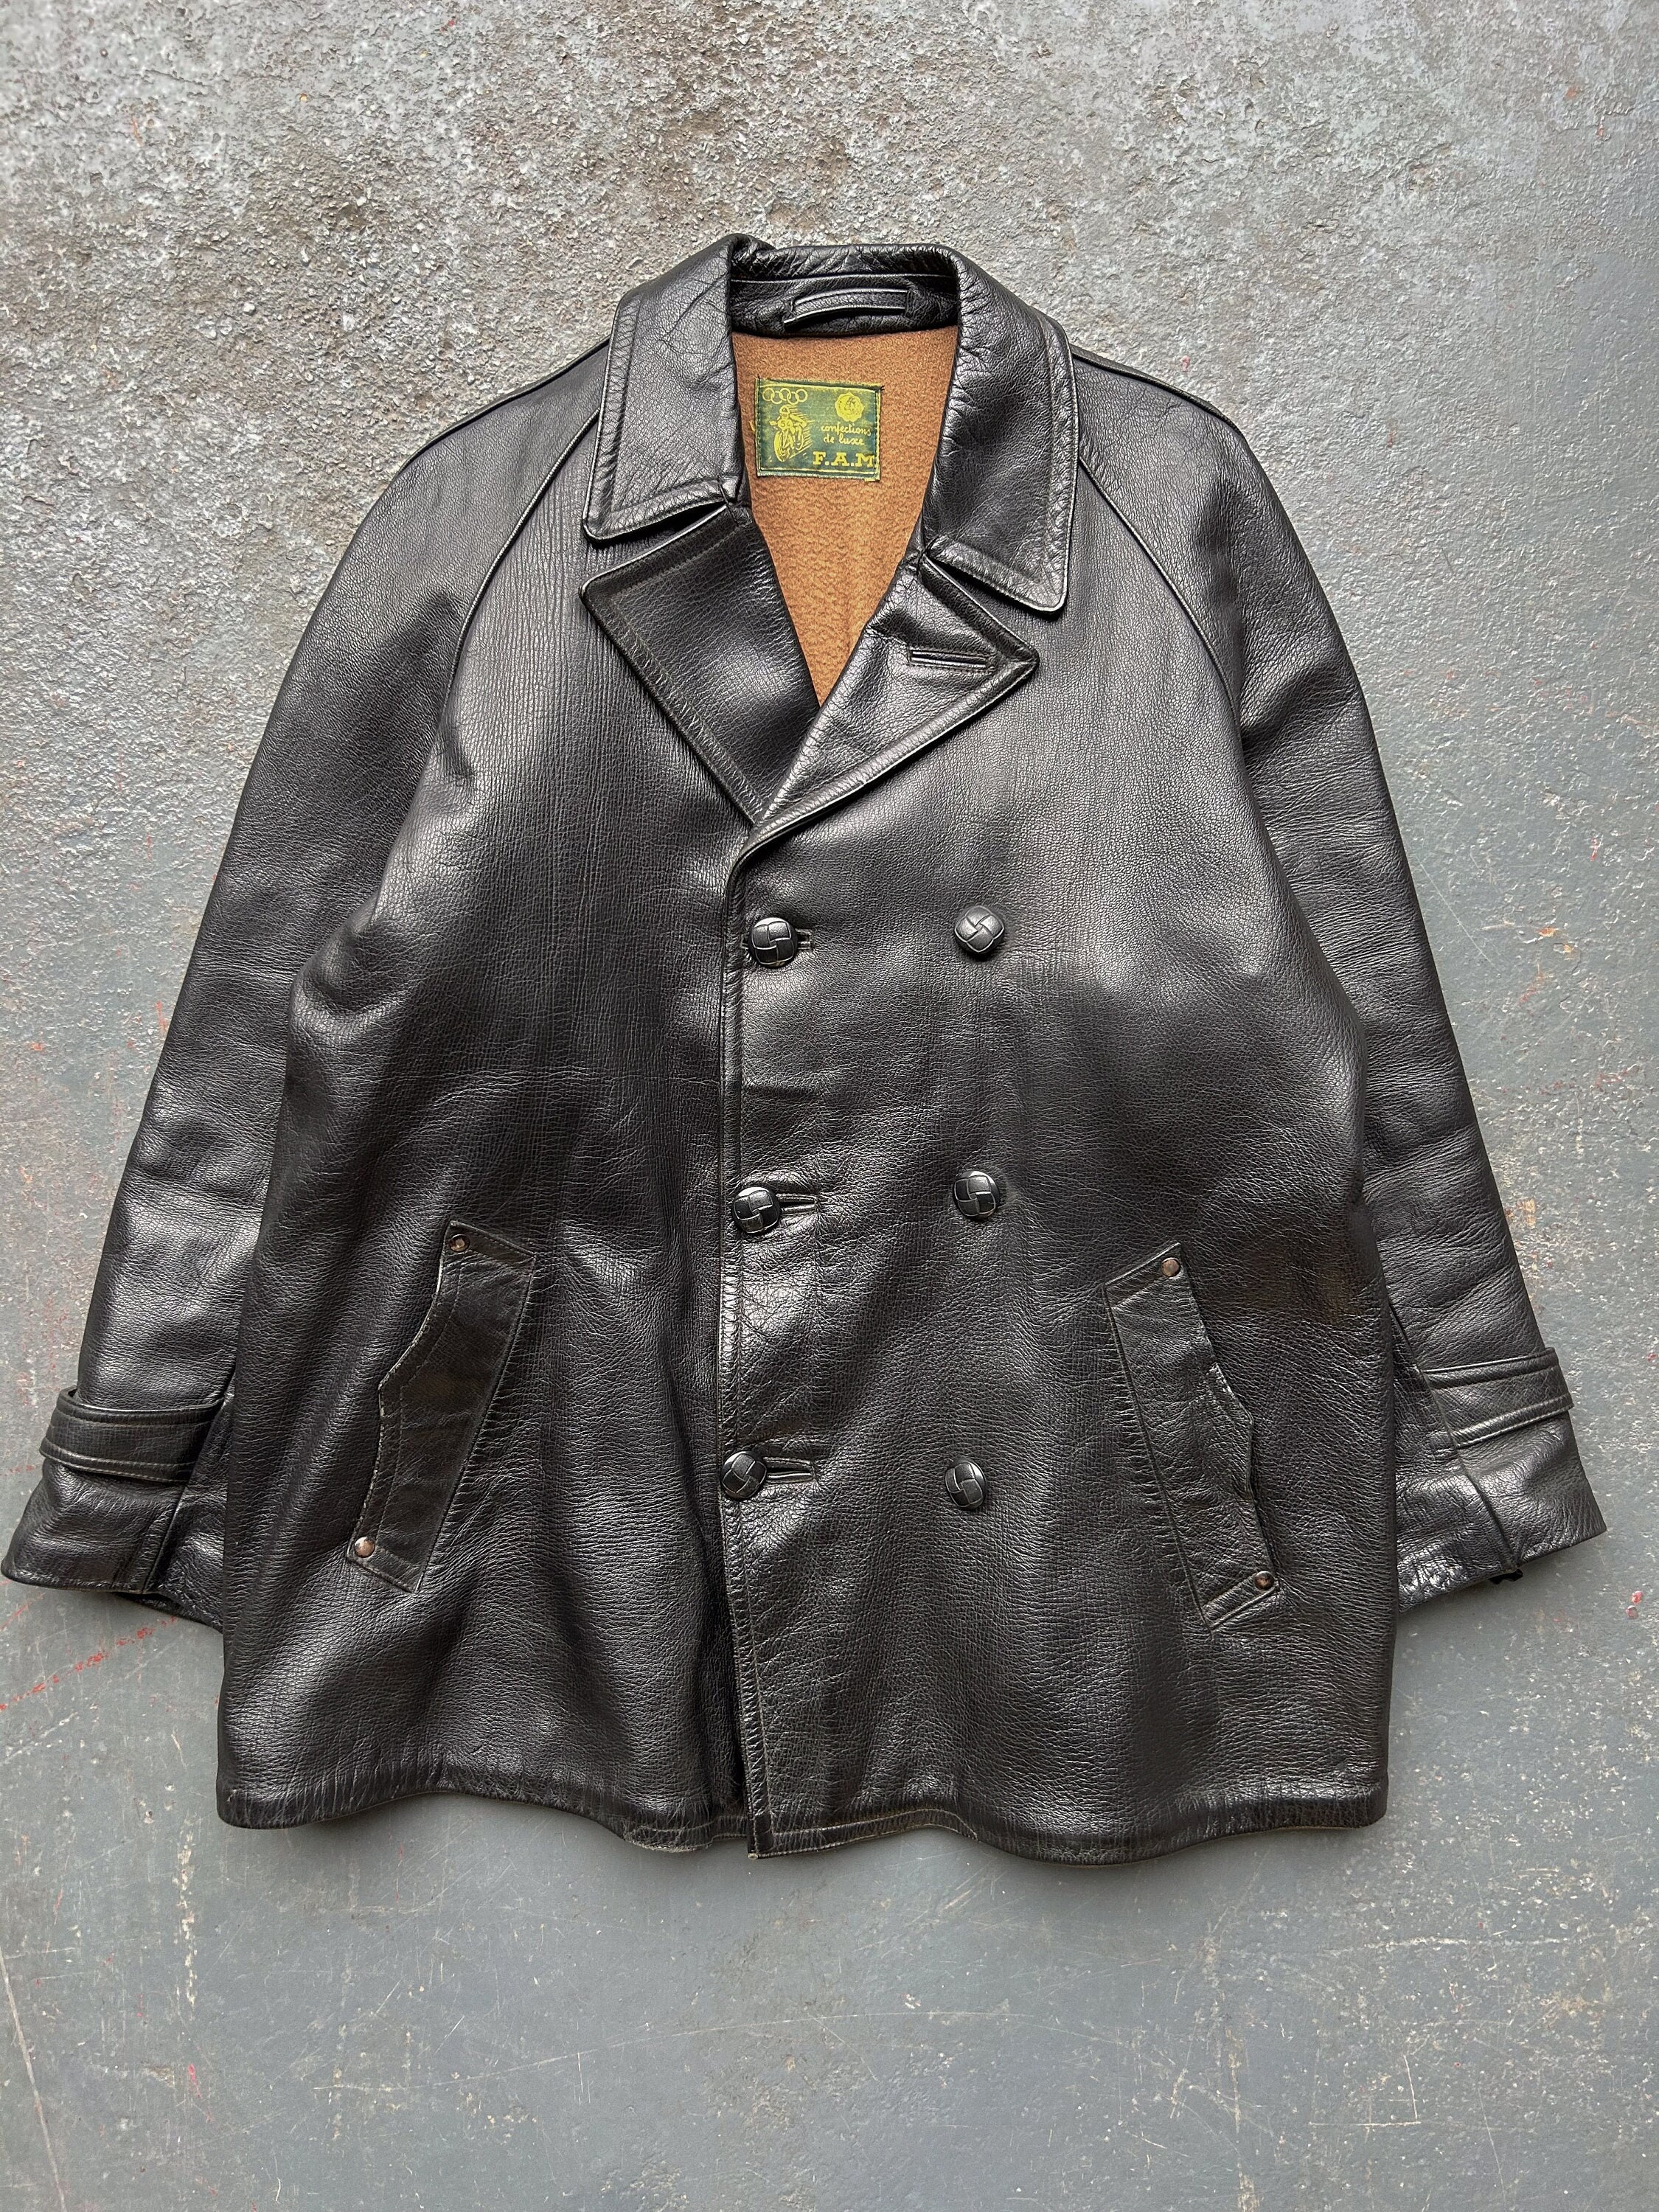 Real Vintage Search Engine F.a.m Italian Leather Motorcycle Jacket 1940S Vintage $396.92 AT vintagedancer.com